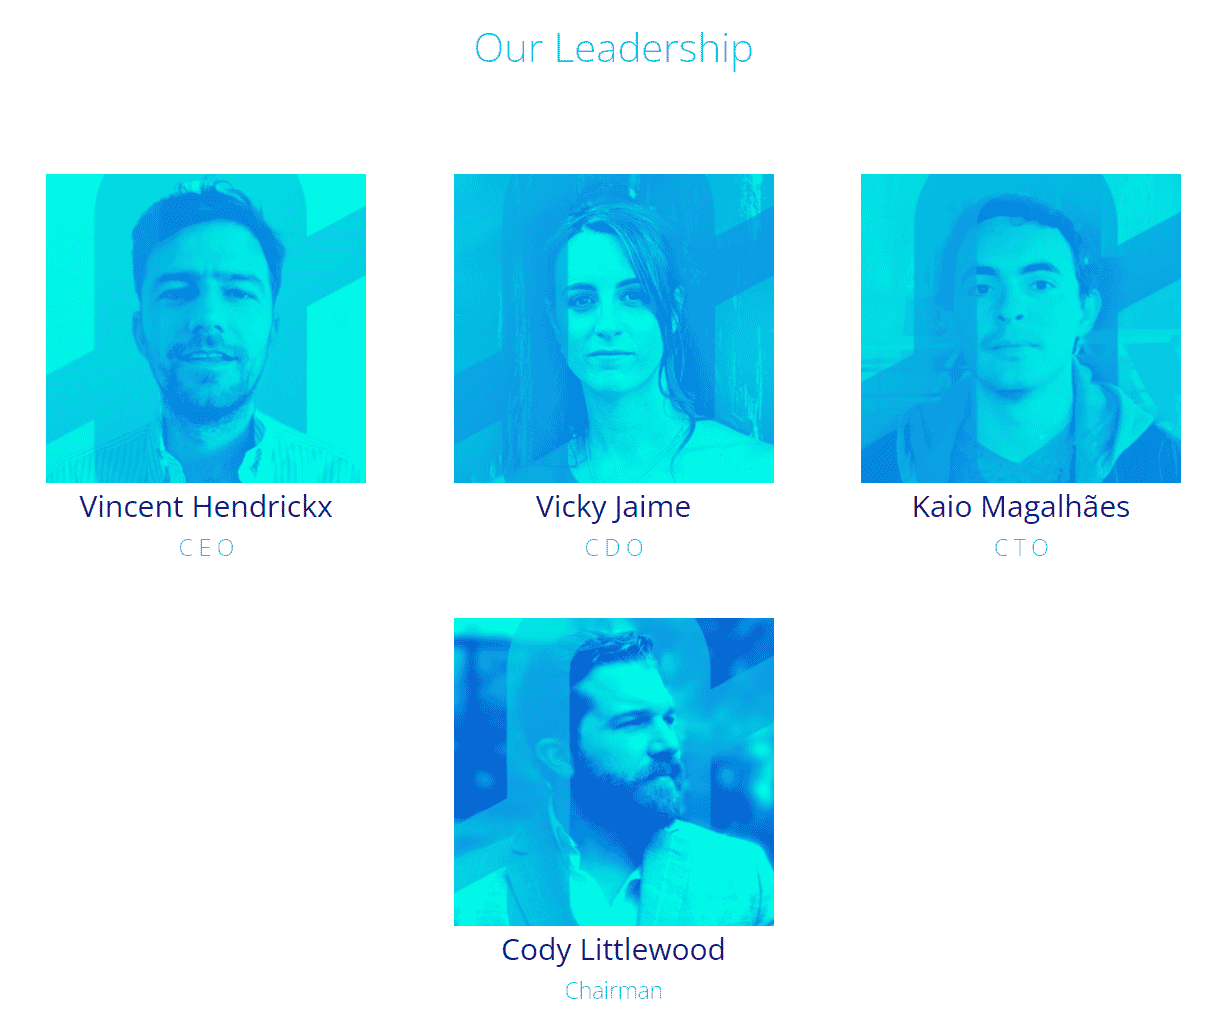 The company leaders